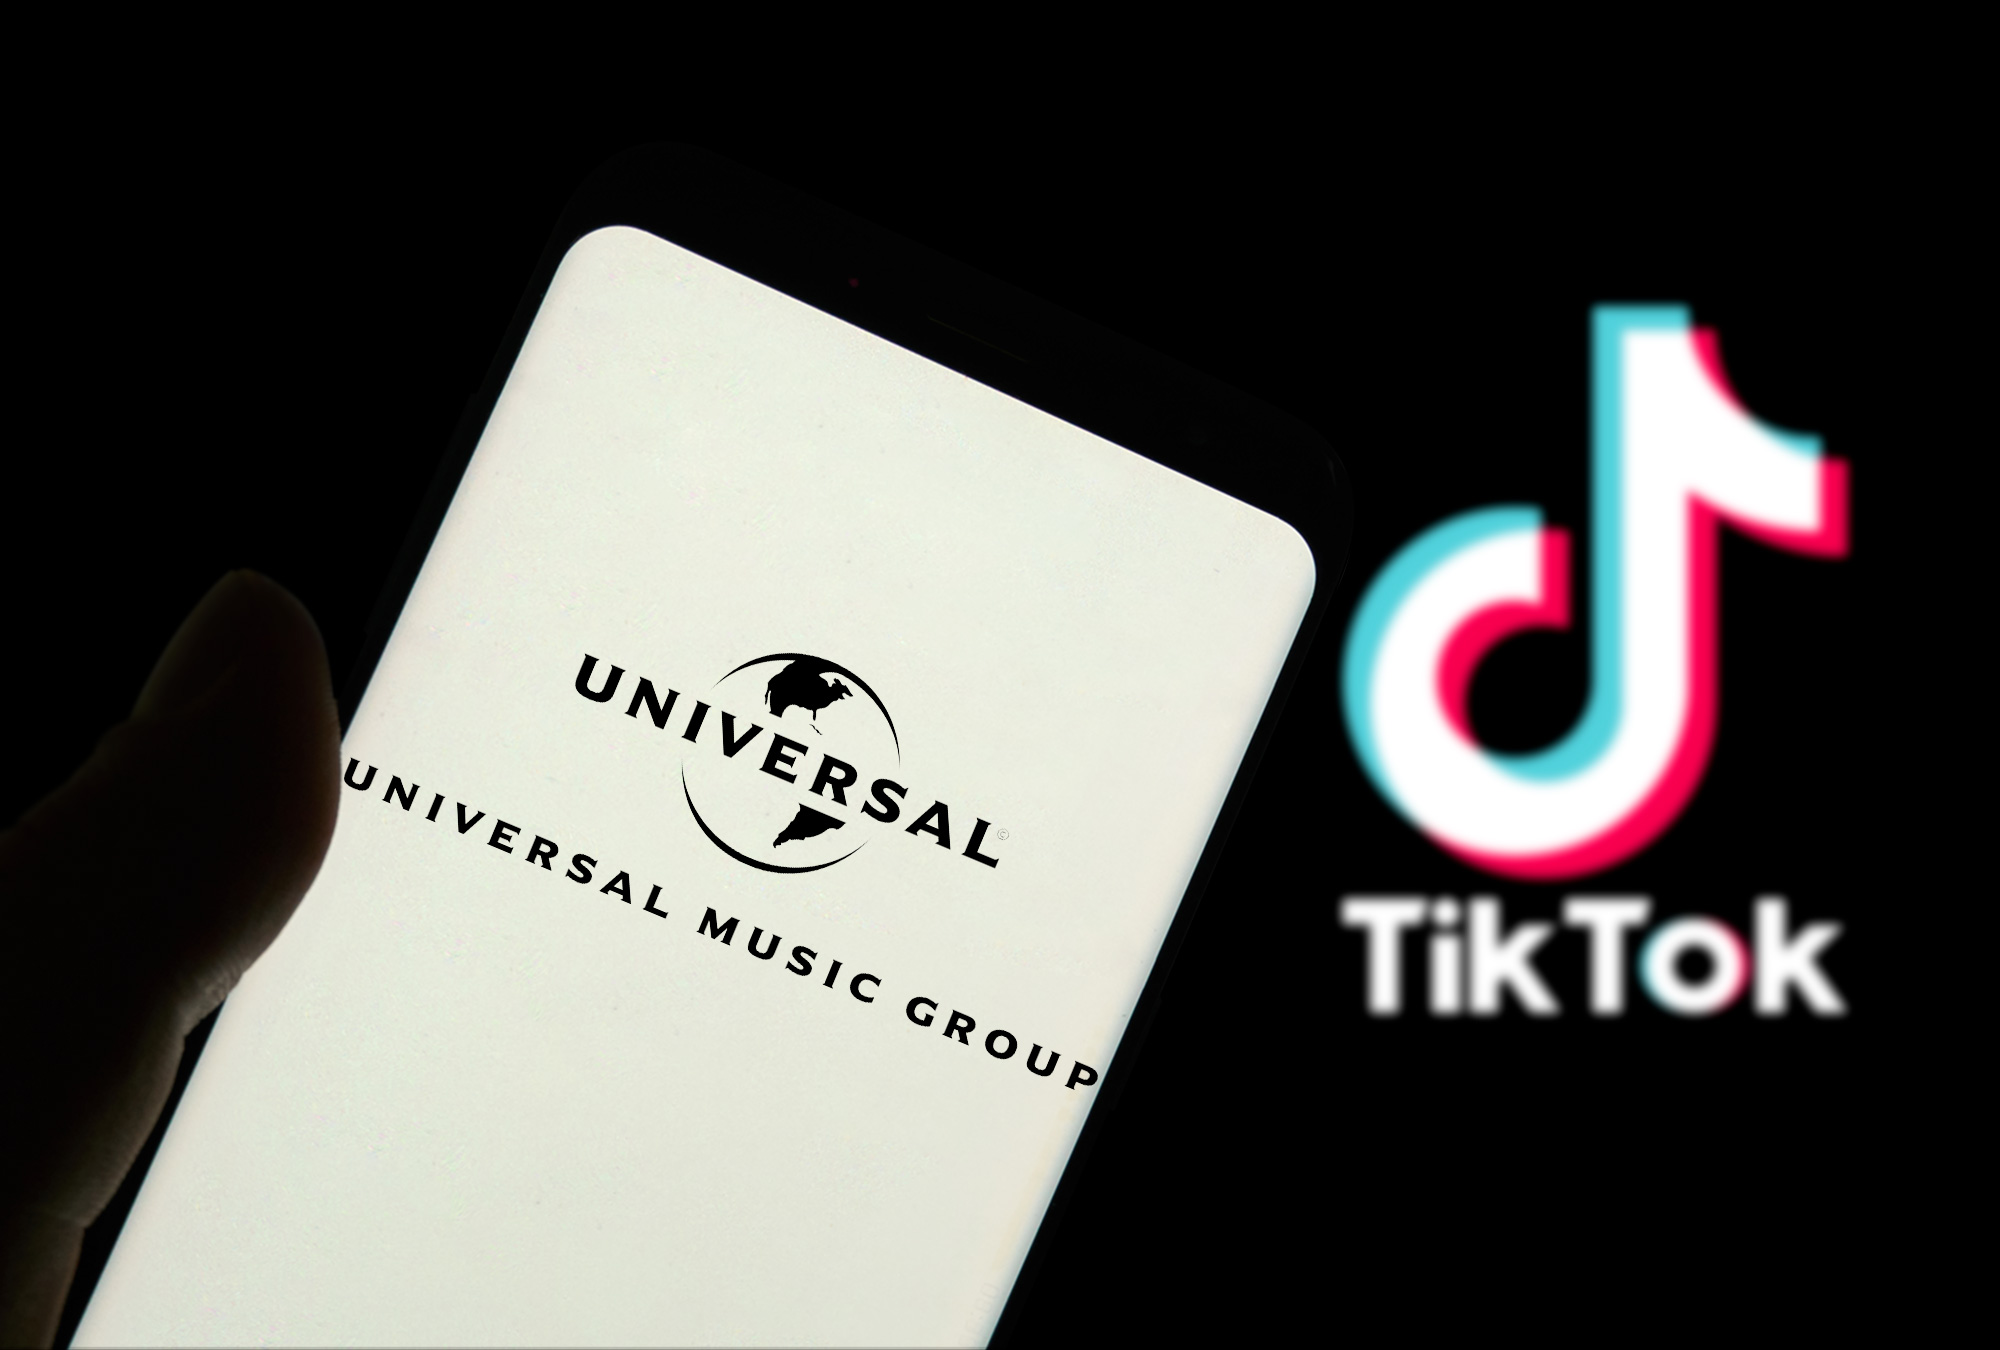 TikTok enfrenta un importante cambio con la salida de Universal Music.